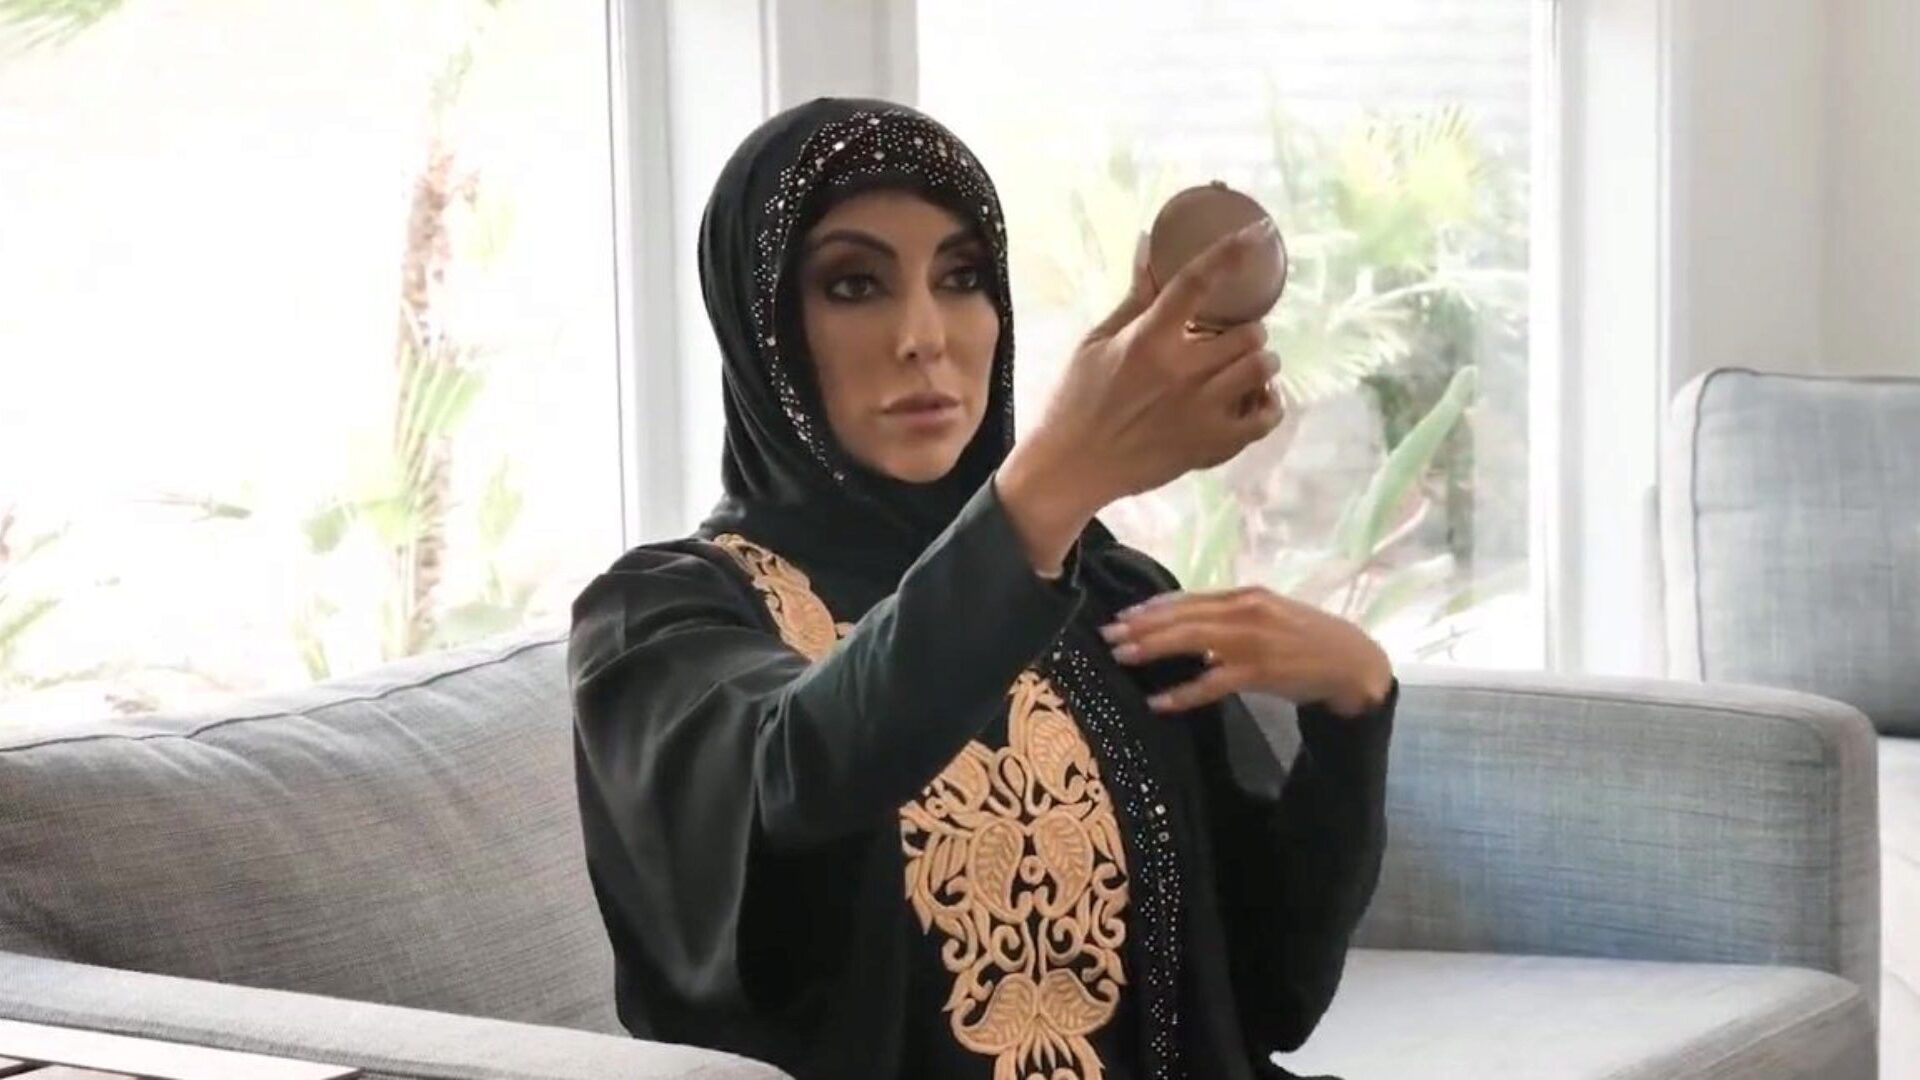 ova Arapkinja bila je posramljena, ali je i dalje sisala debelog penisa, arapska praškasta praska, hd